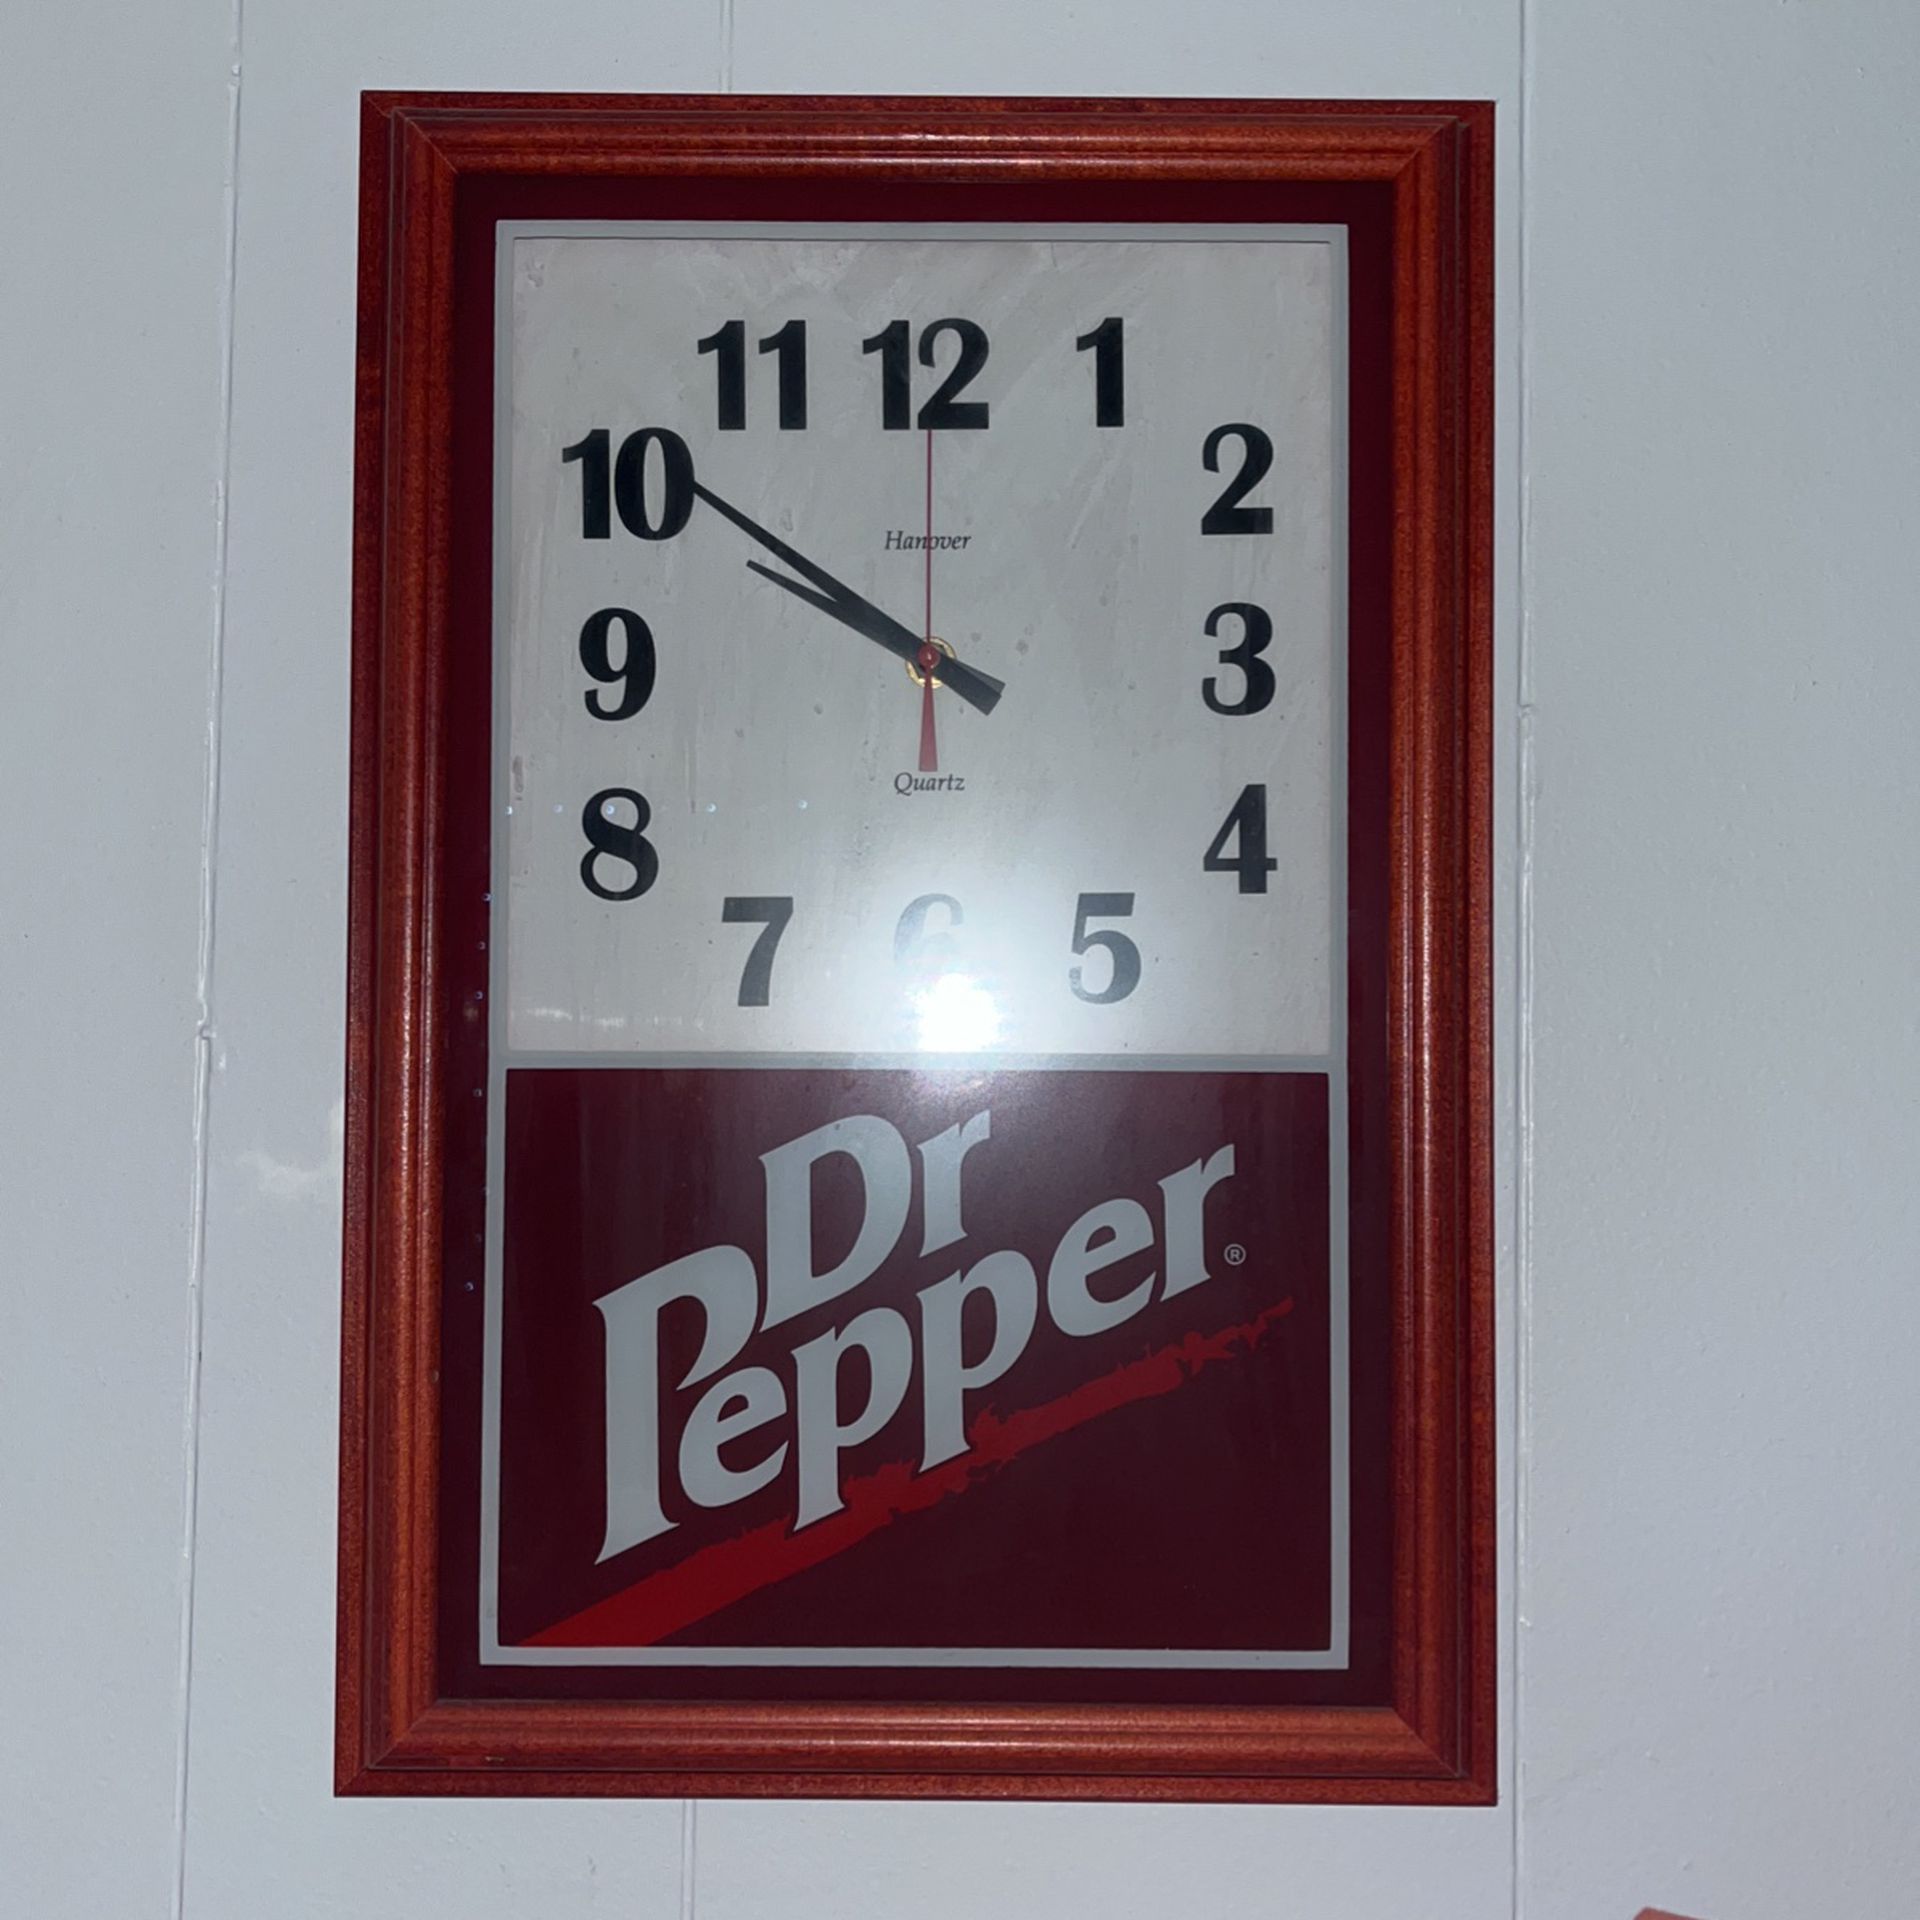 Dr. Pepper clock 